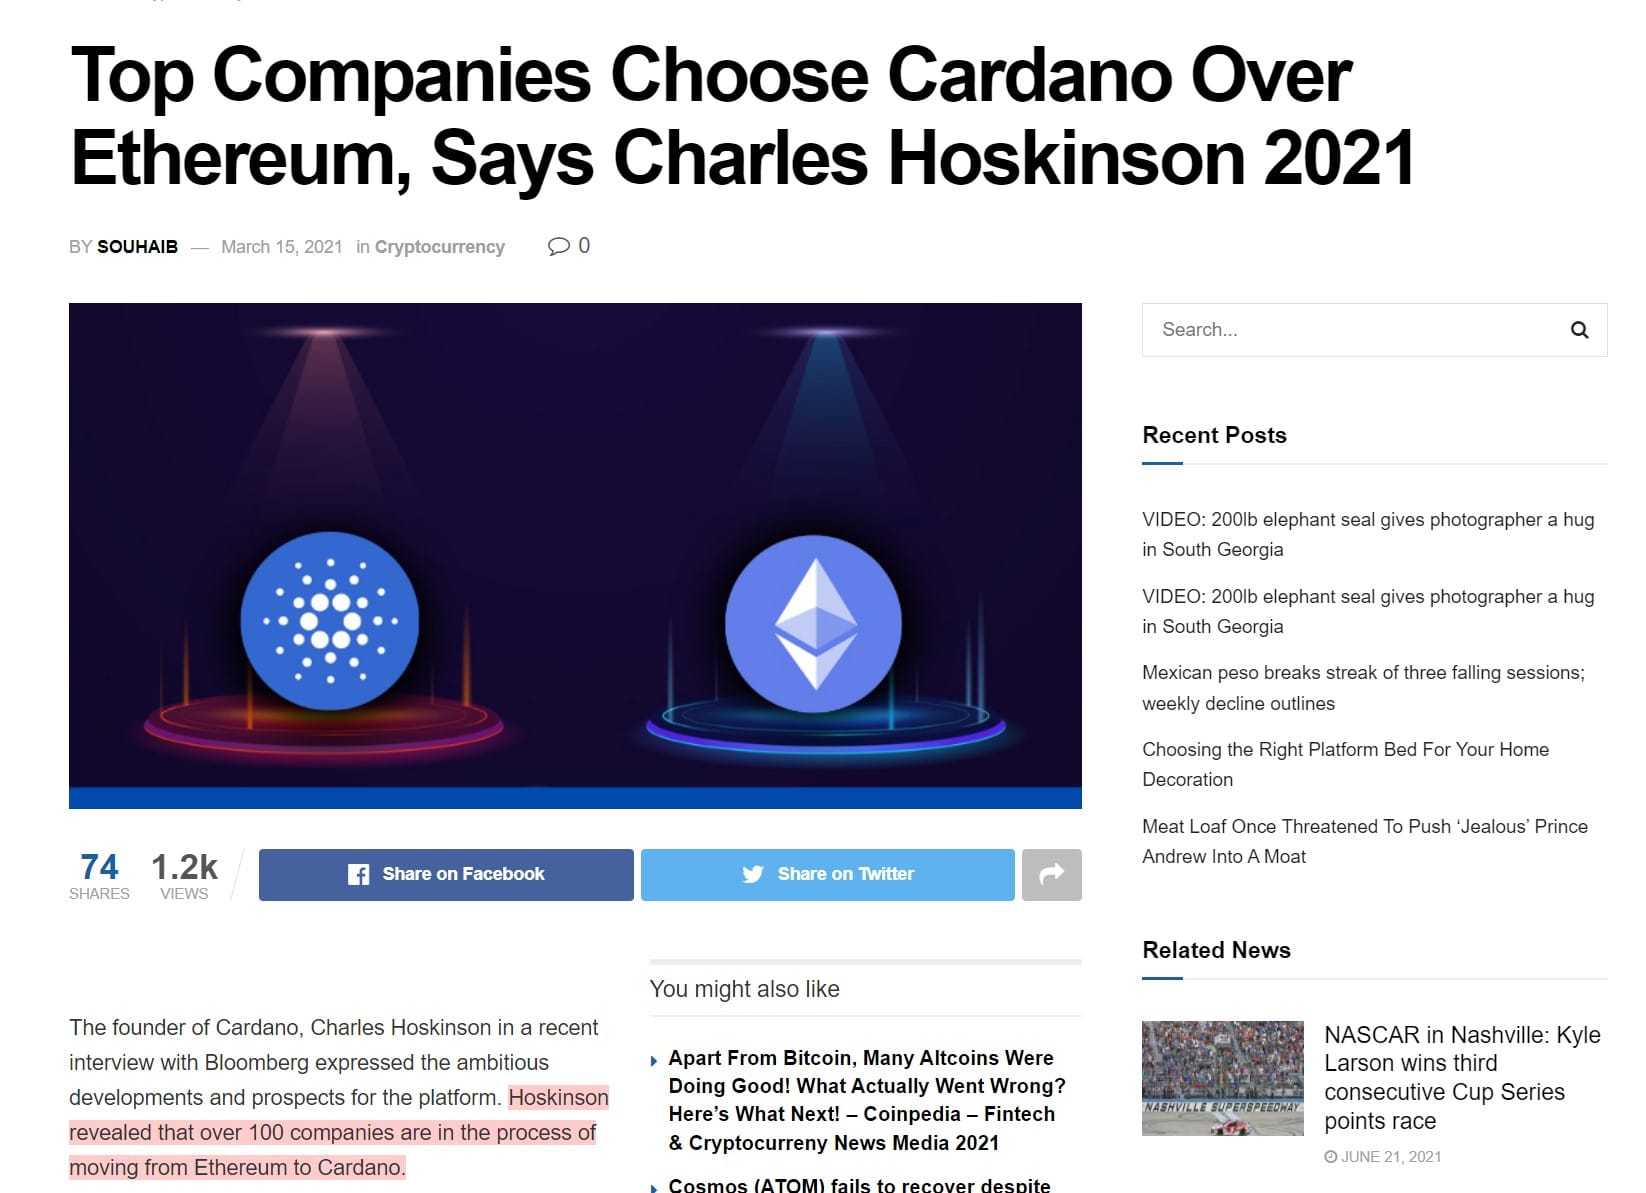 Top Companies Choosing Cardano